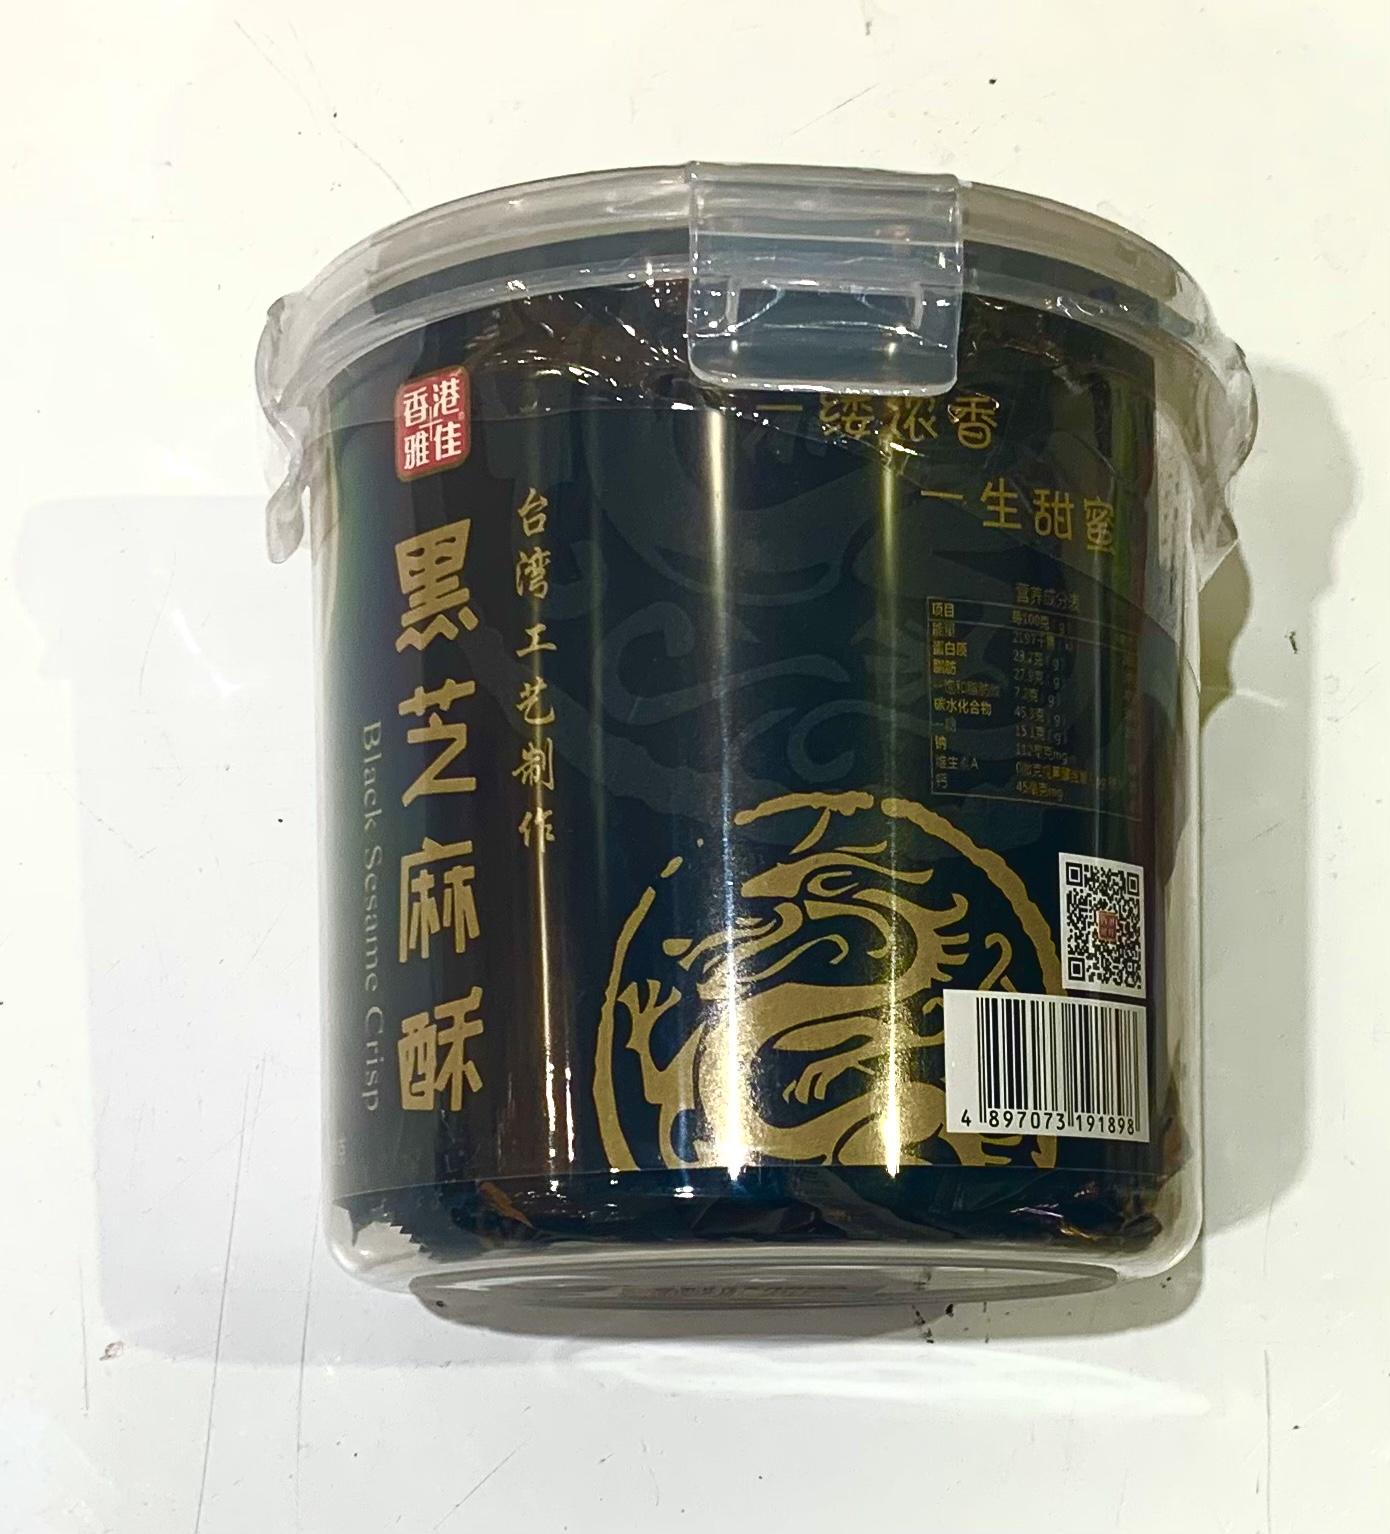 hongkong-black-sesame-crisp